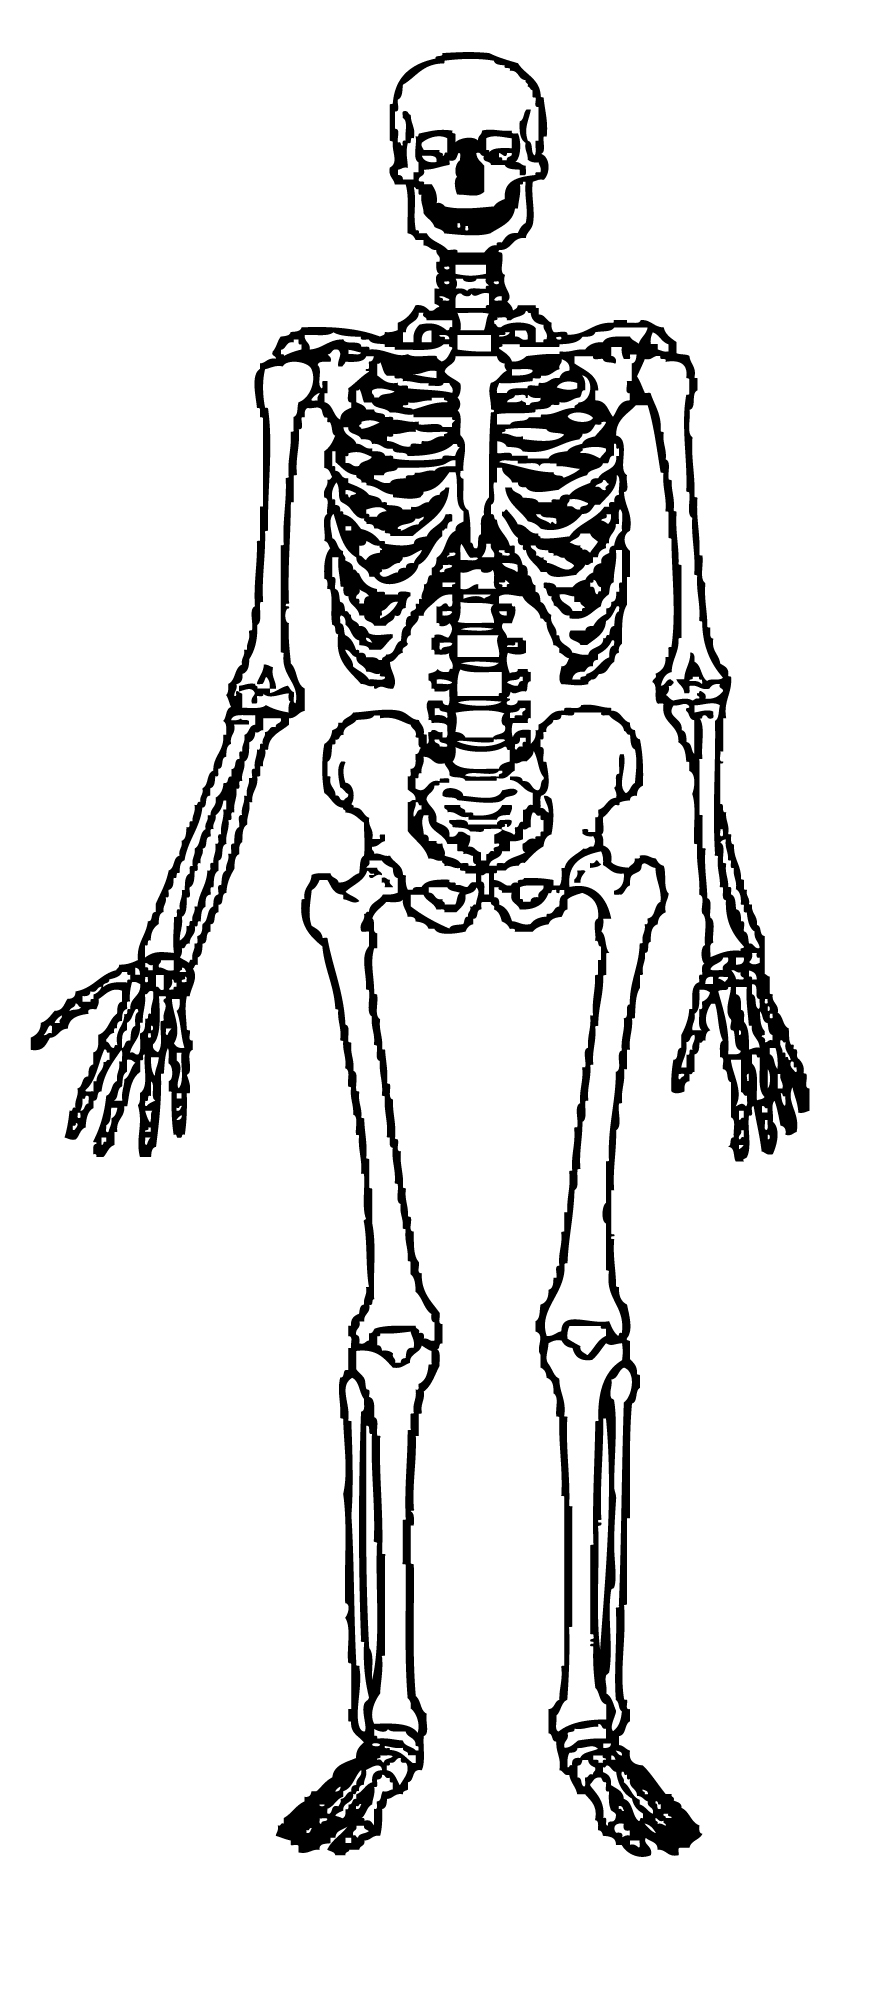 Skeleton Images Free Download Clipart